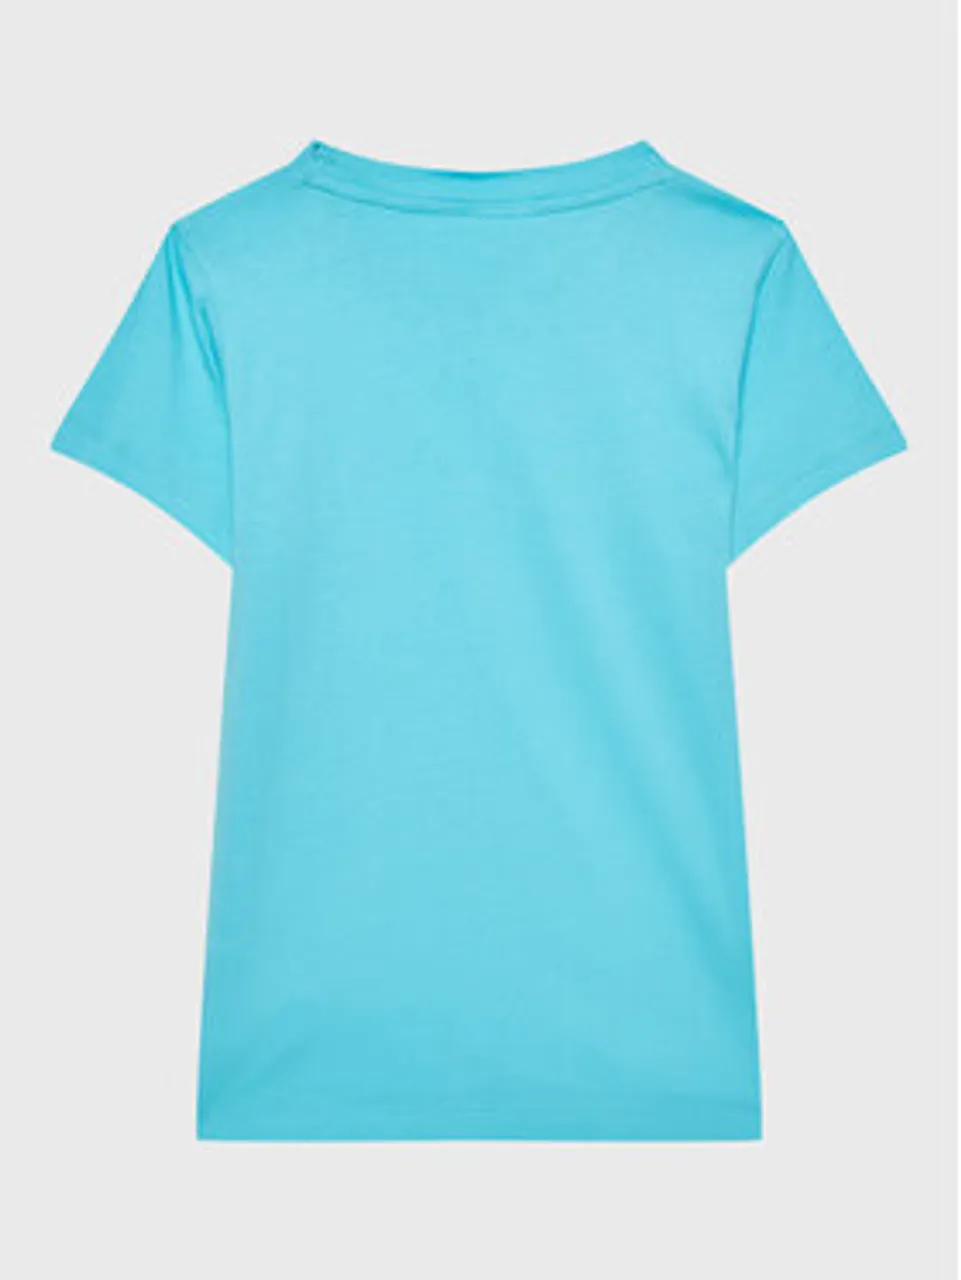 Champion T-Shirt 404541 Blau Regular Fit